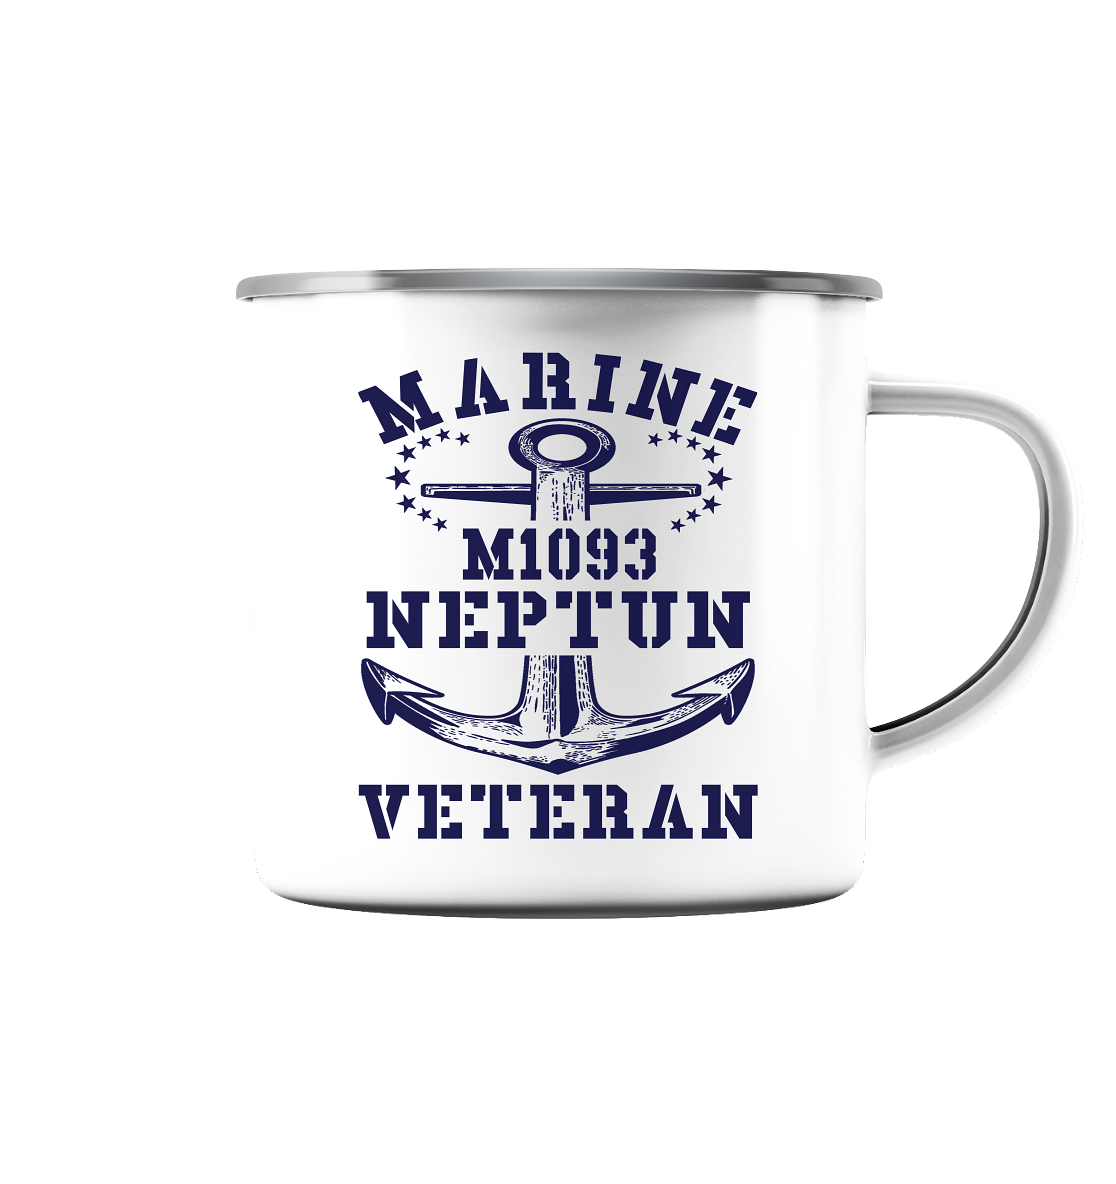 SM-Boot M1093 NEPTUN Marine Veteran  - Emaille Tasse (Silber)